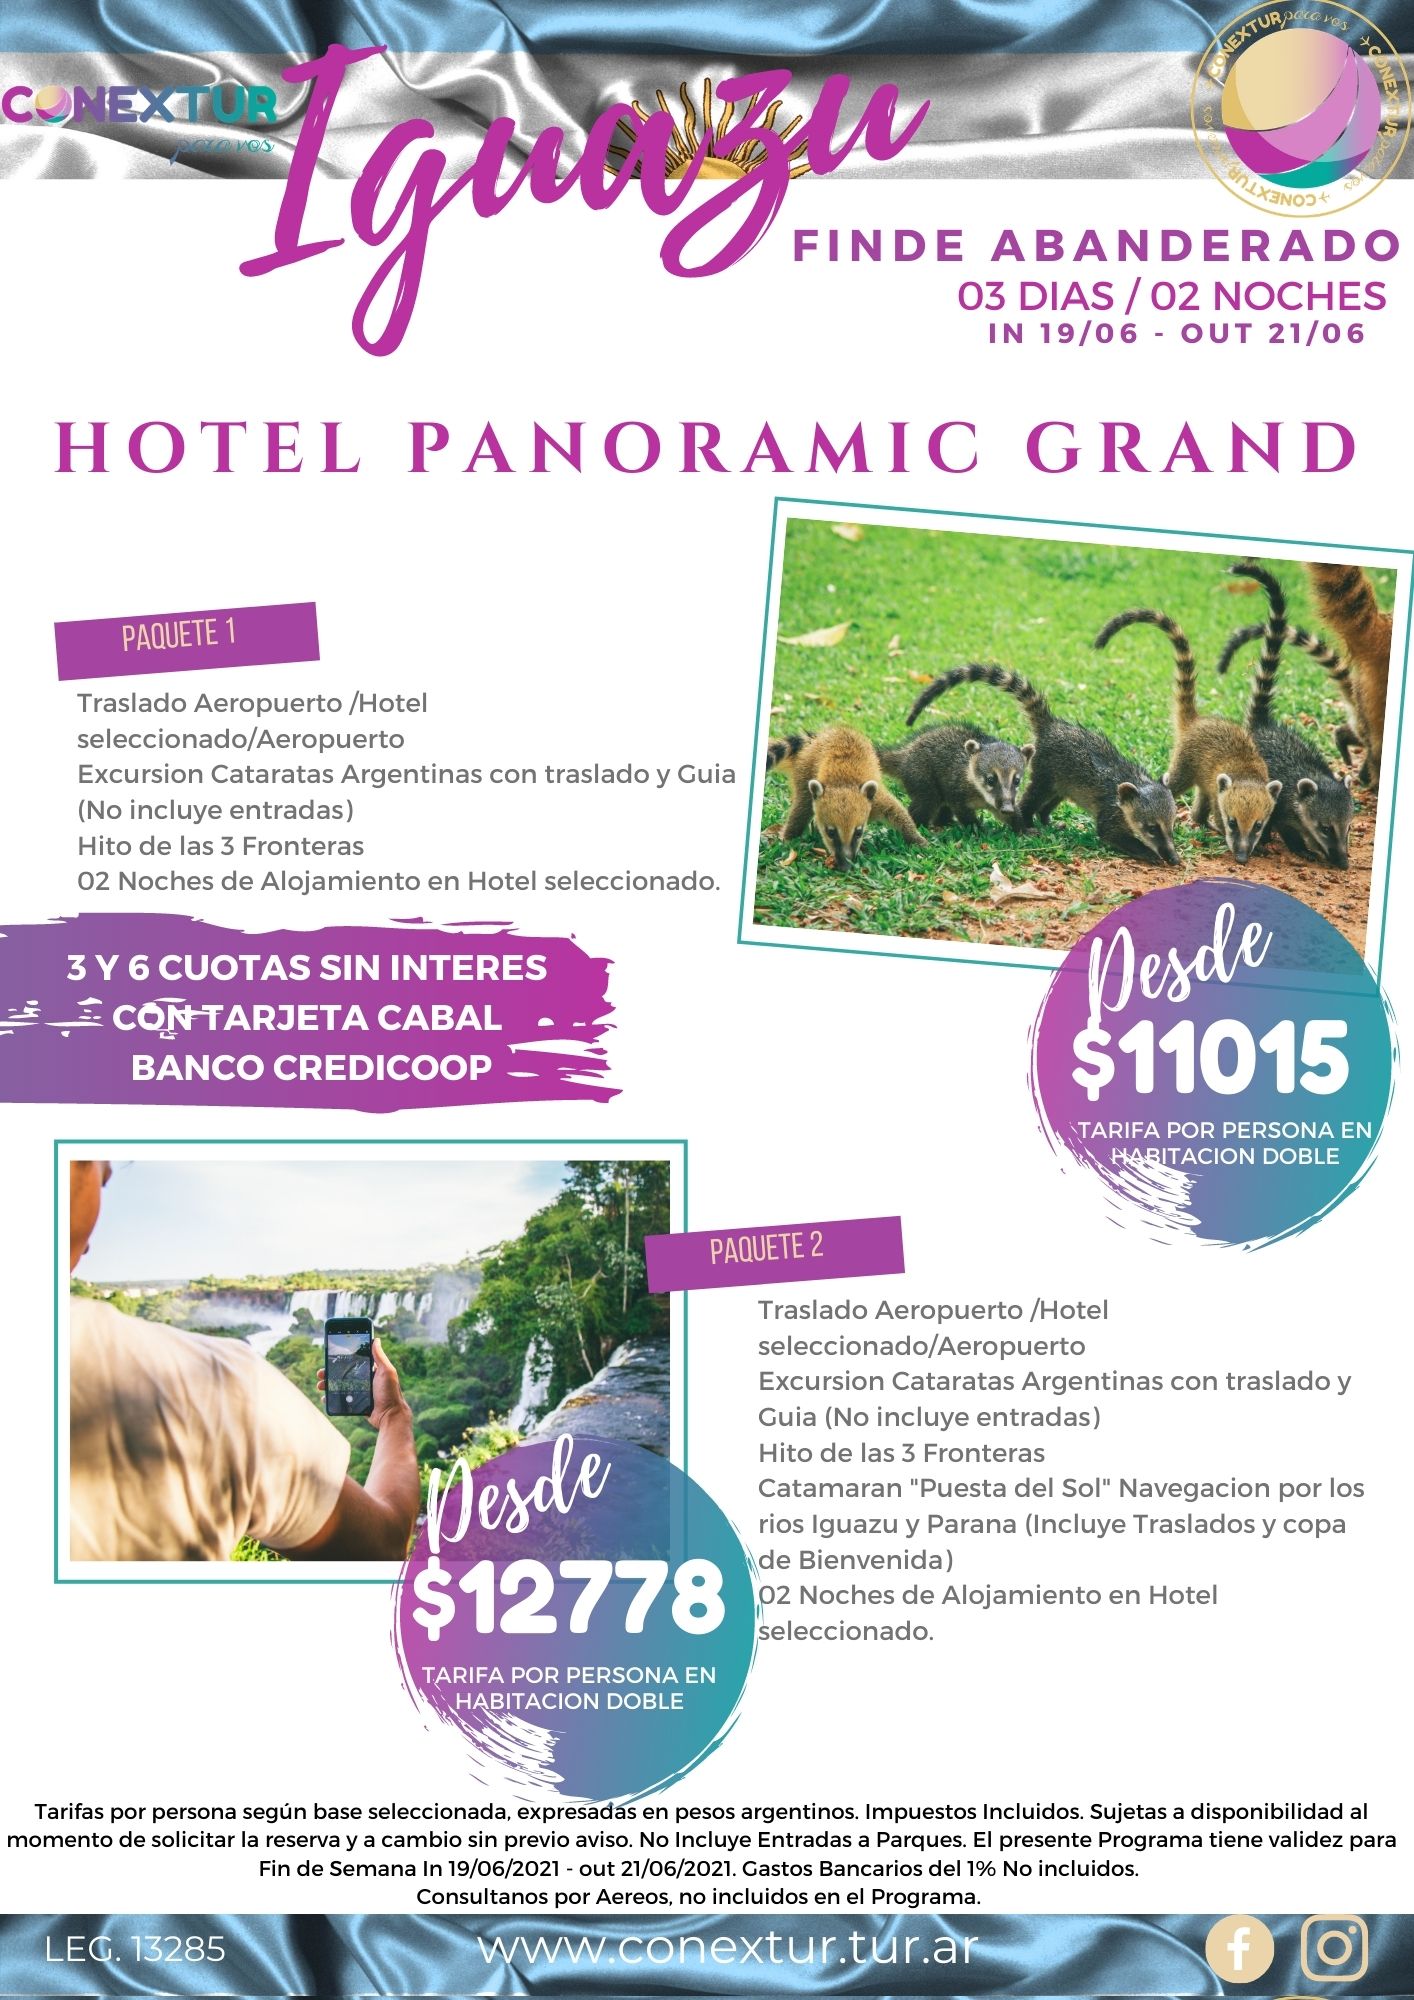 Hotel Panoramic Grand - Iguazu